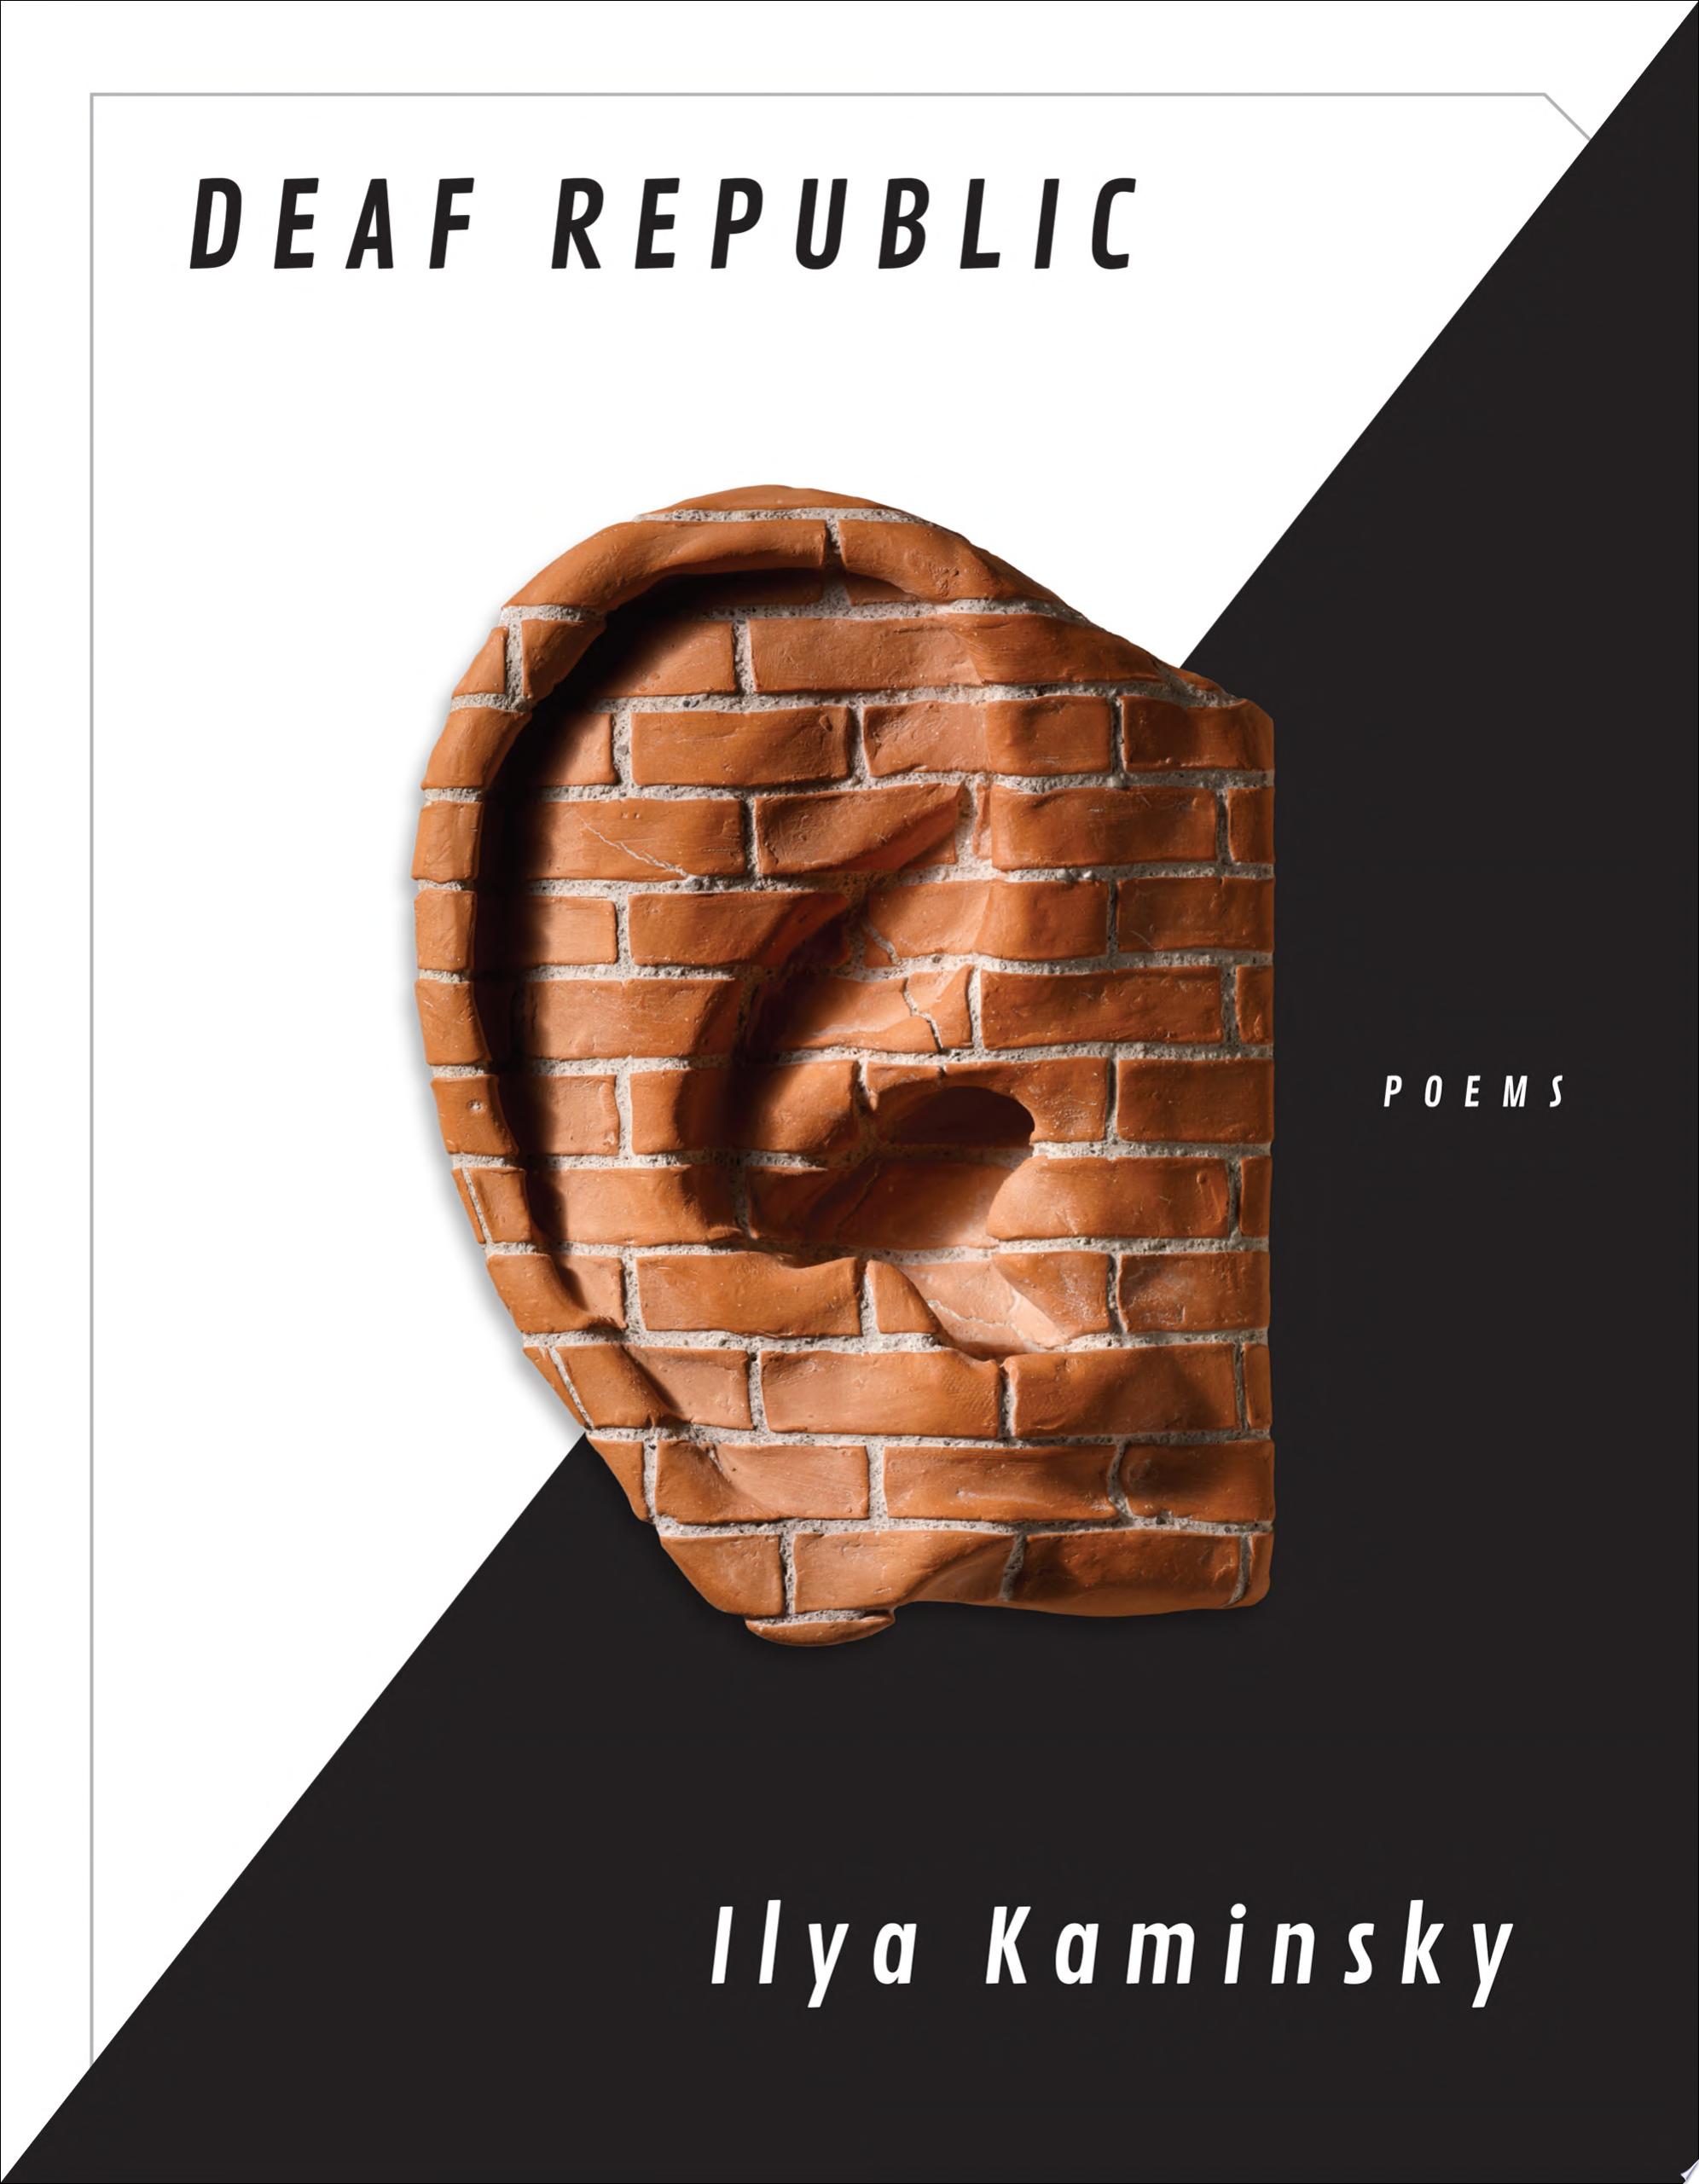 Image for "Deaf Republic"